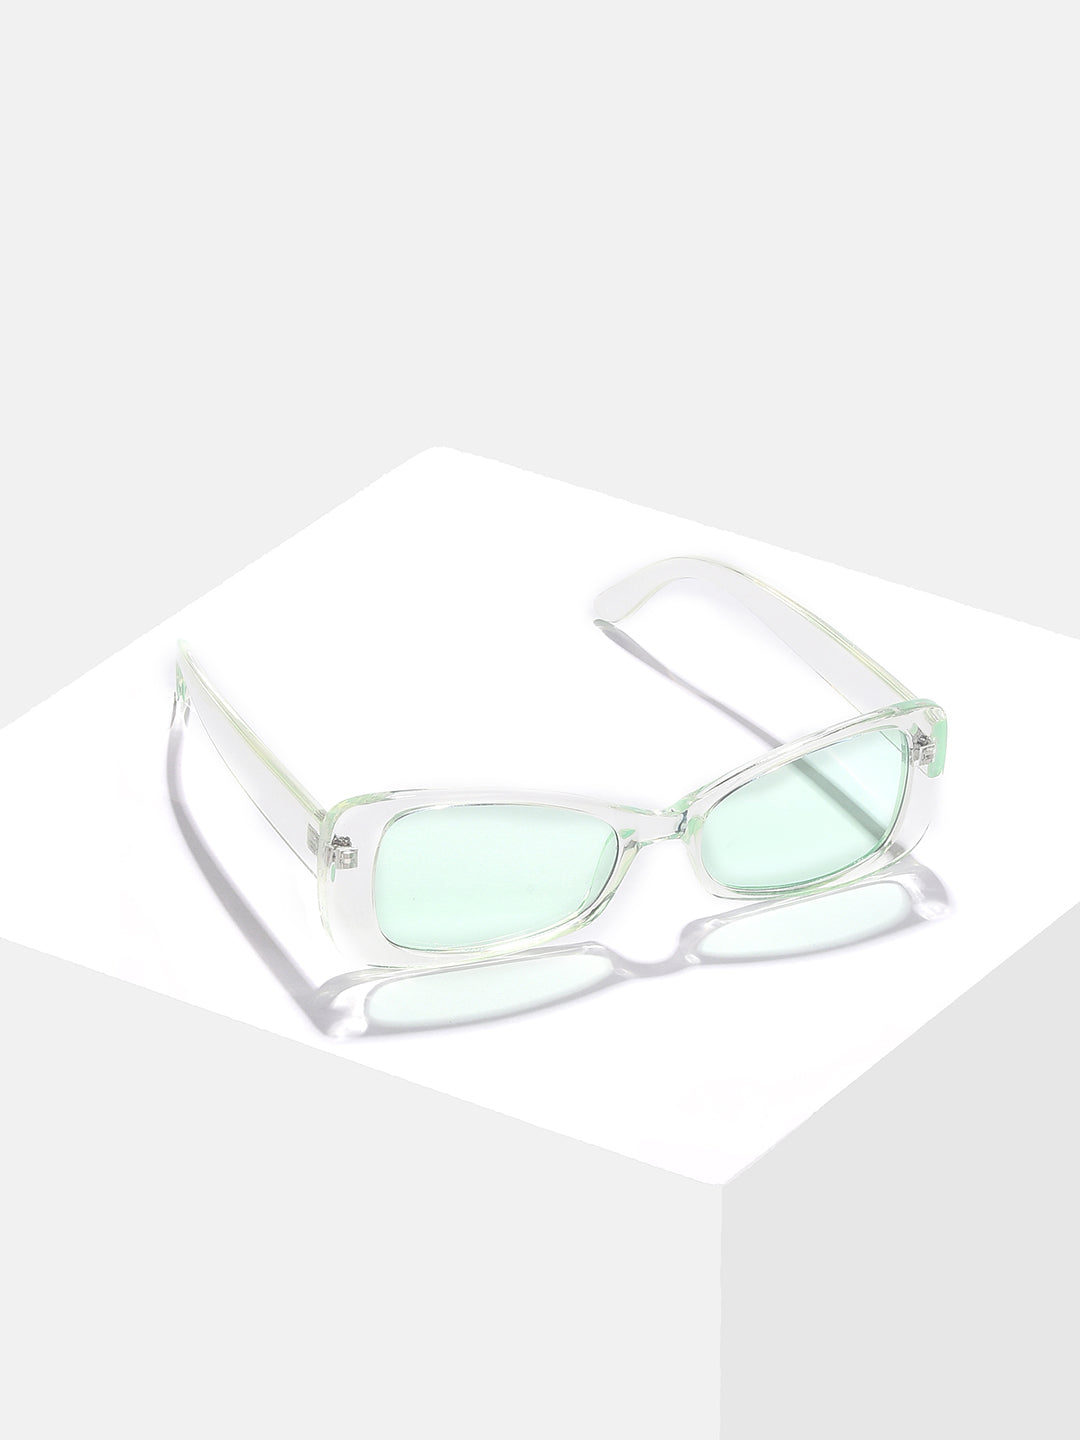 Black Lens Green Cateye Sunglasses